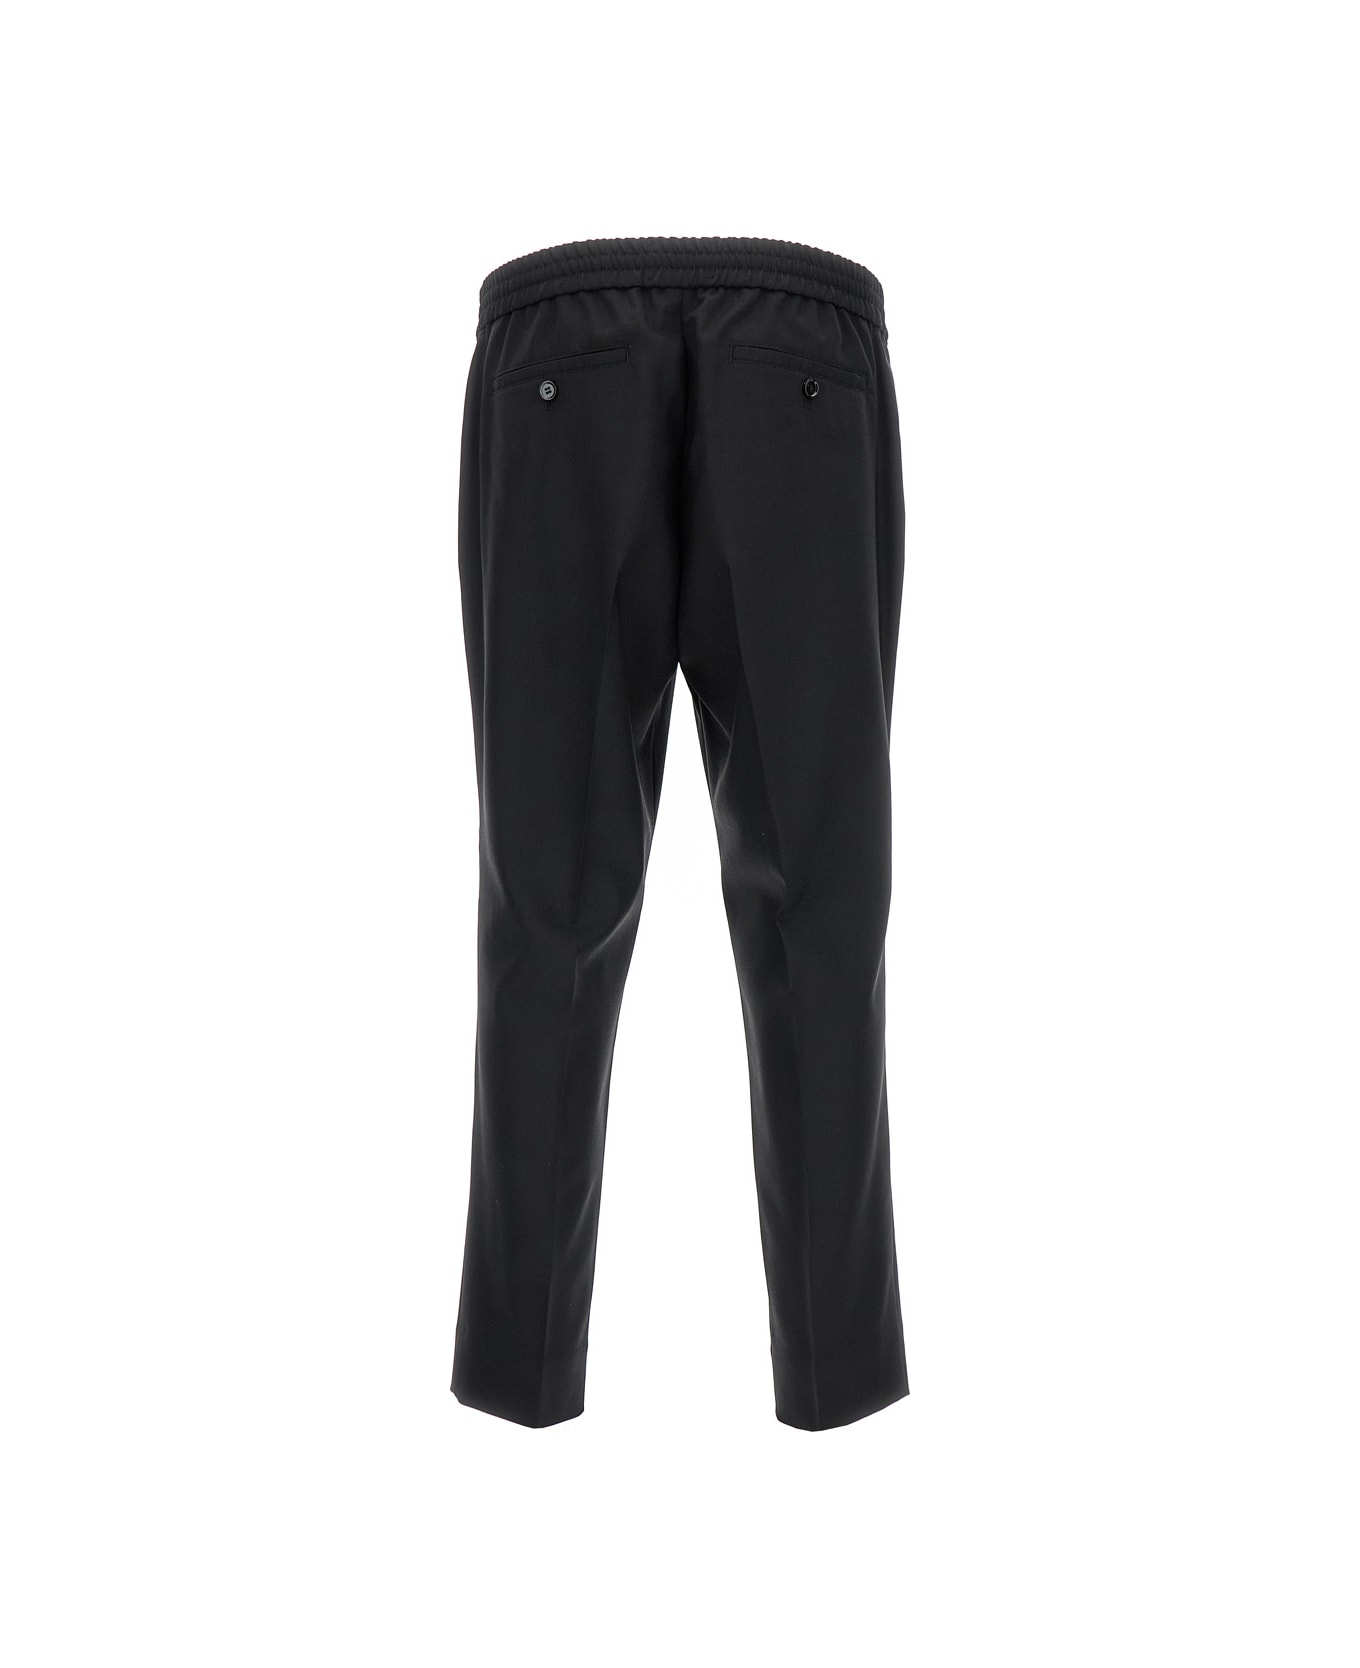 Ami Alexandre Mattiussi Black Trousers With Rear Pockets In Wool Man - Black